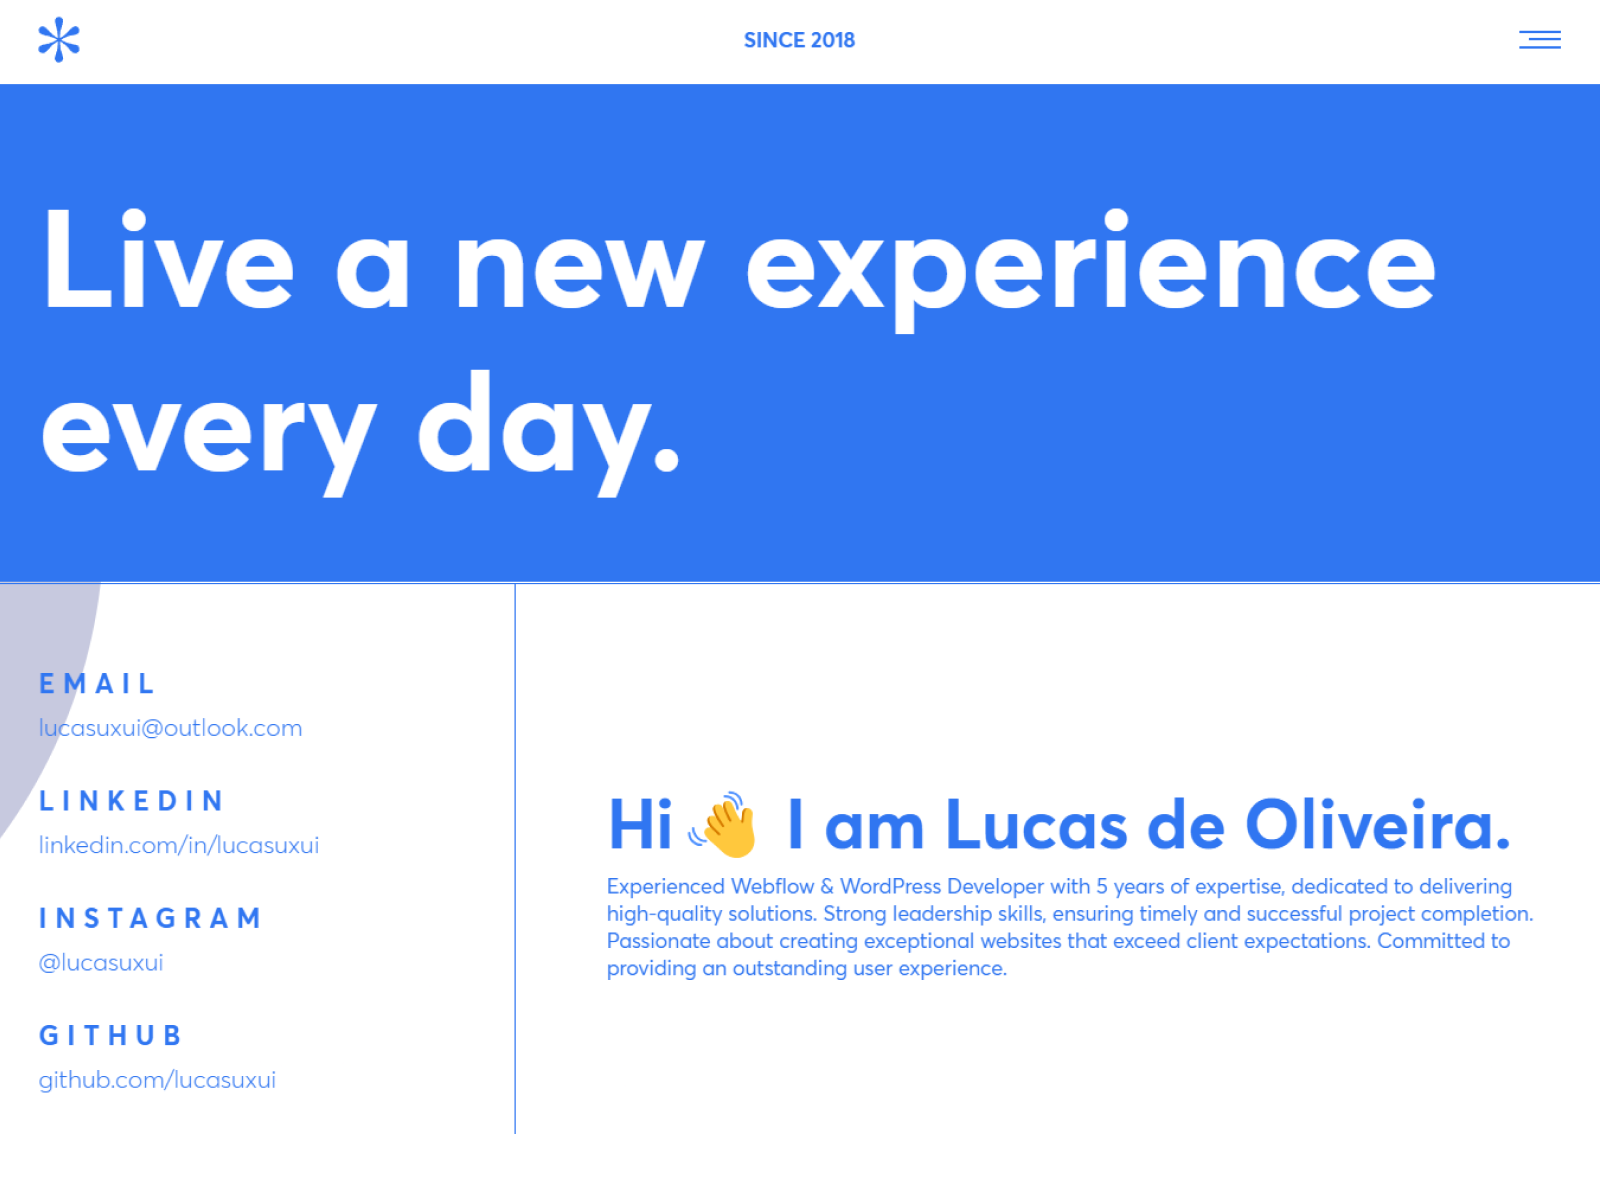 About Me - Lucas de Oliveira